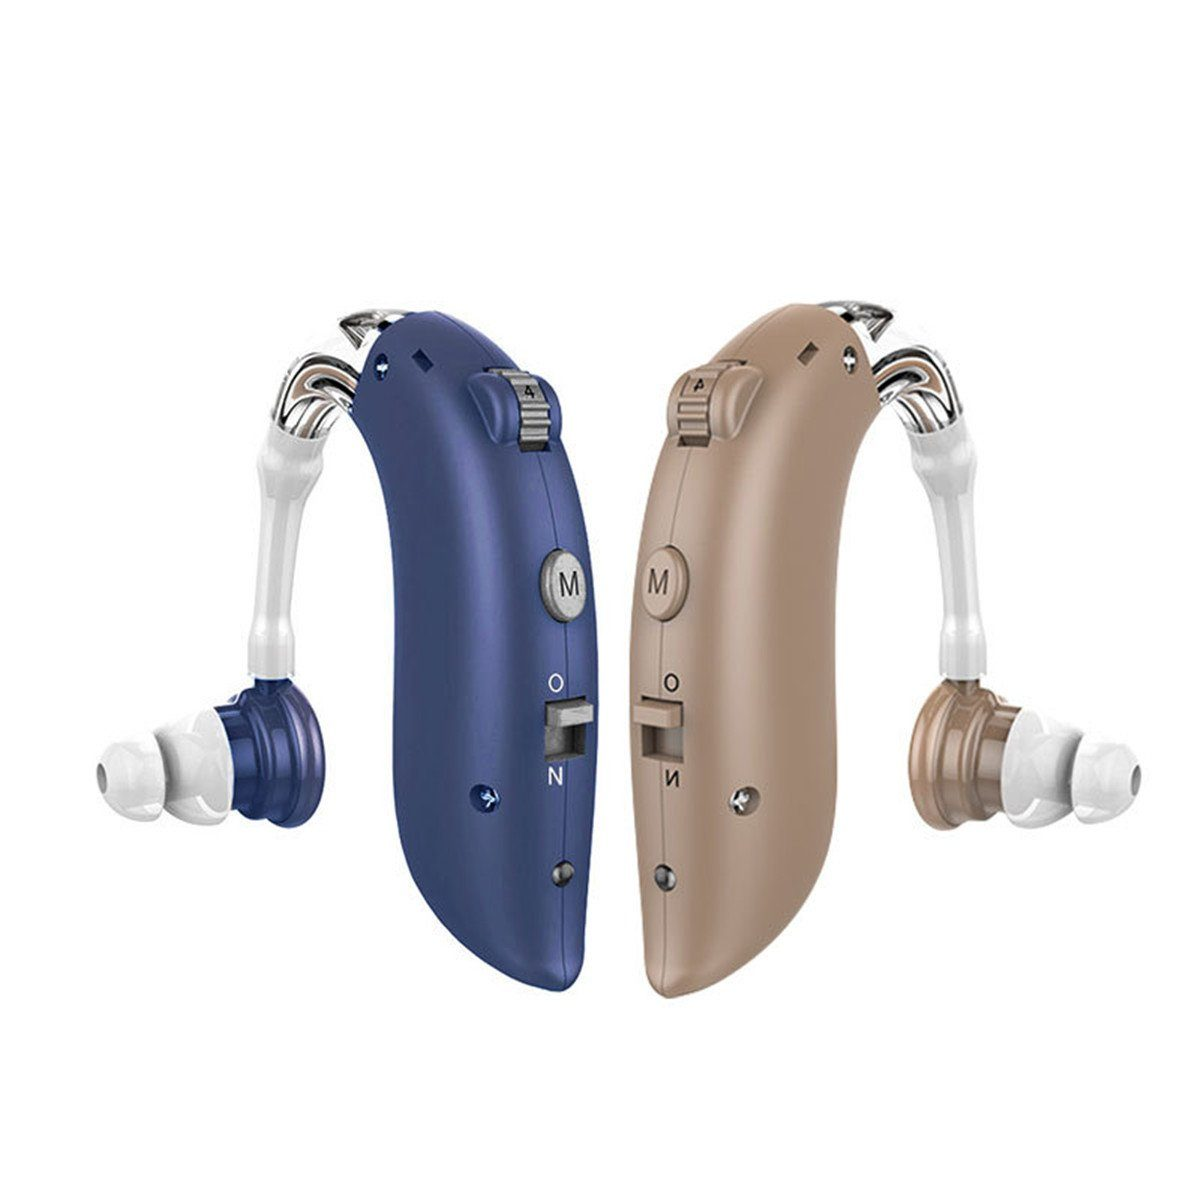 SYNTEK Hörgerät,Hörverstärker-Smart Hörverstärker mit Anpassung Hörgerät automatischer Geräuschreduzierung und